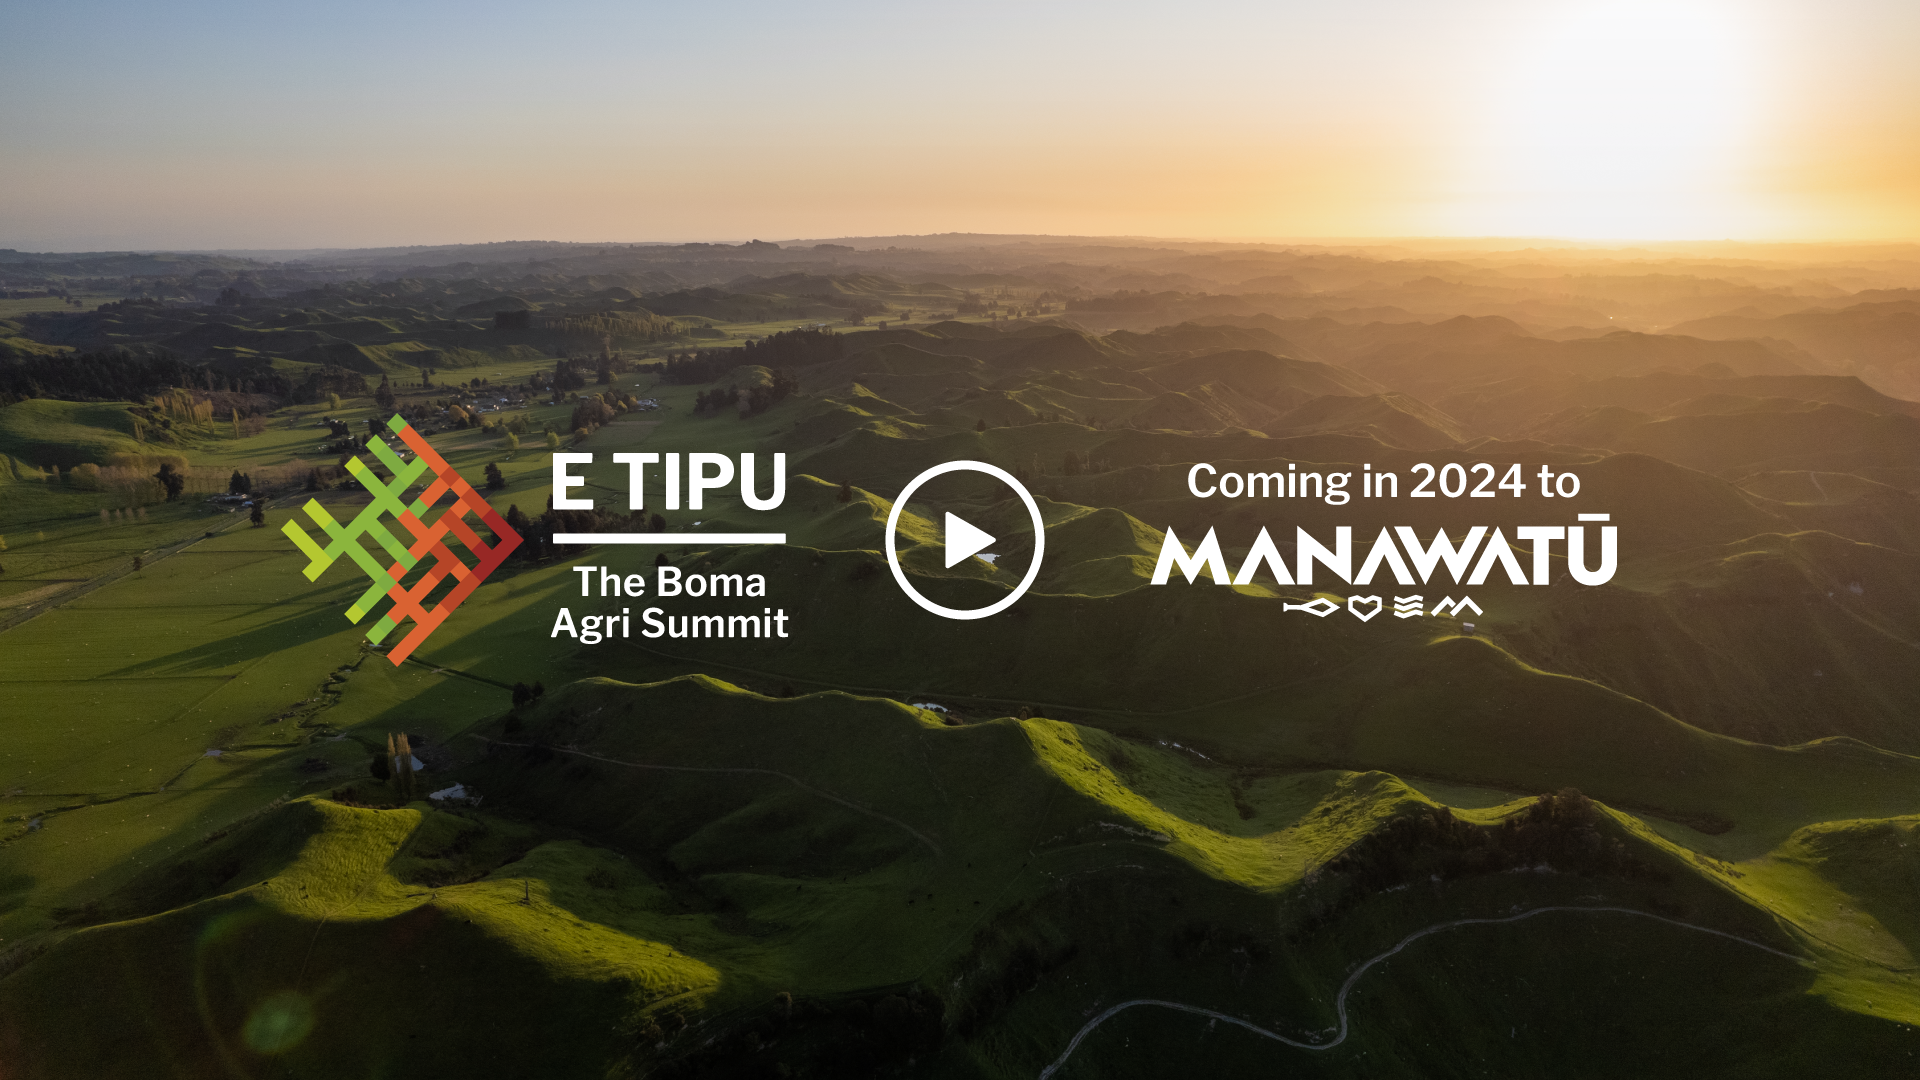 E Tipu: The Boma Agri Summit coming to Manawatū in 2024